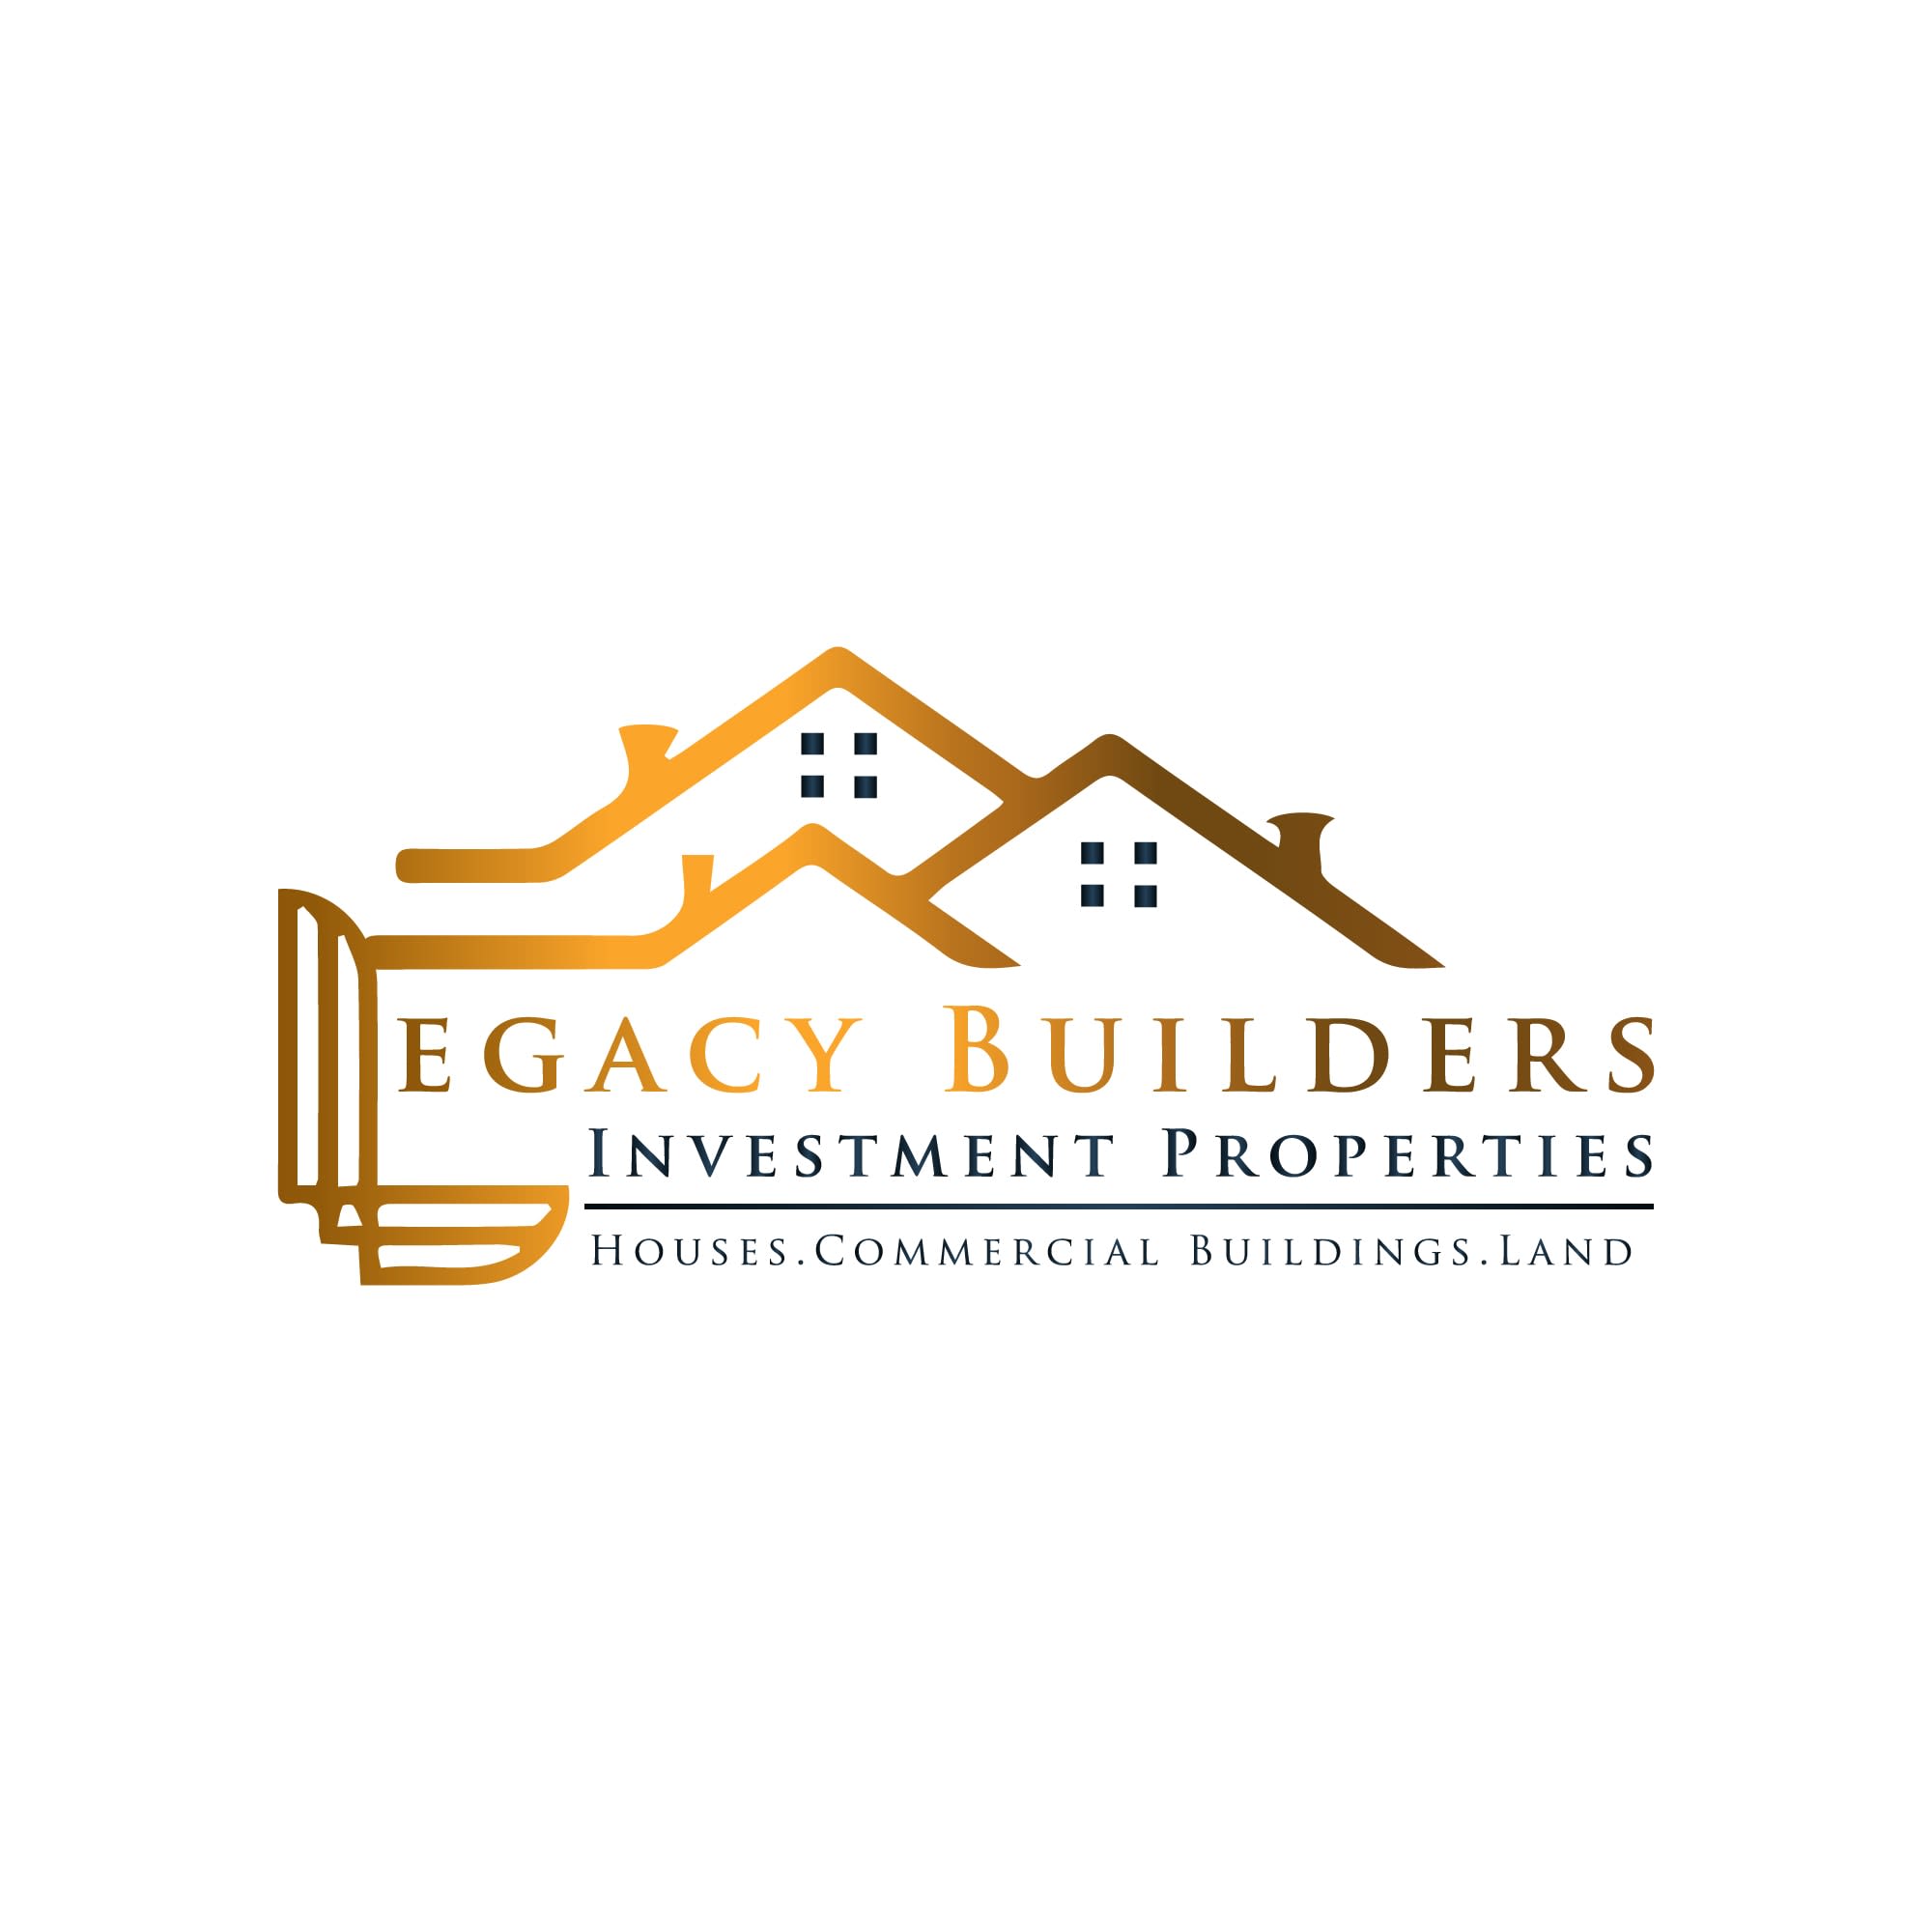 Legacy Builders, LLC (Investment Properties)